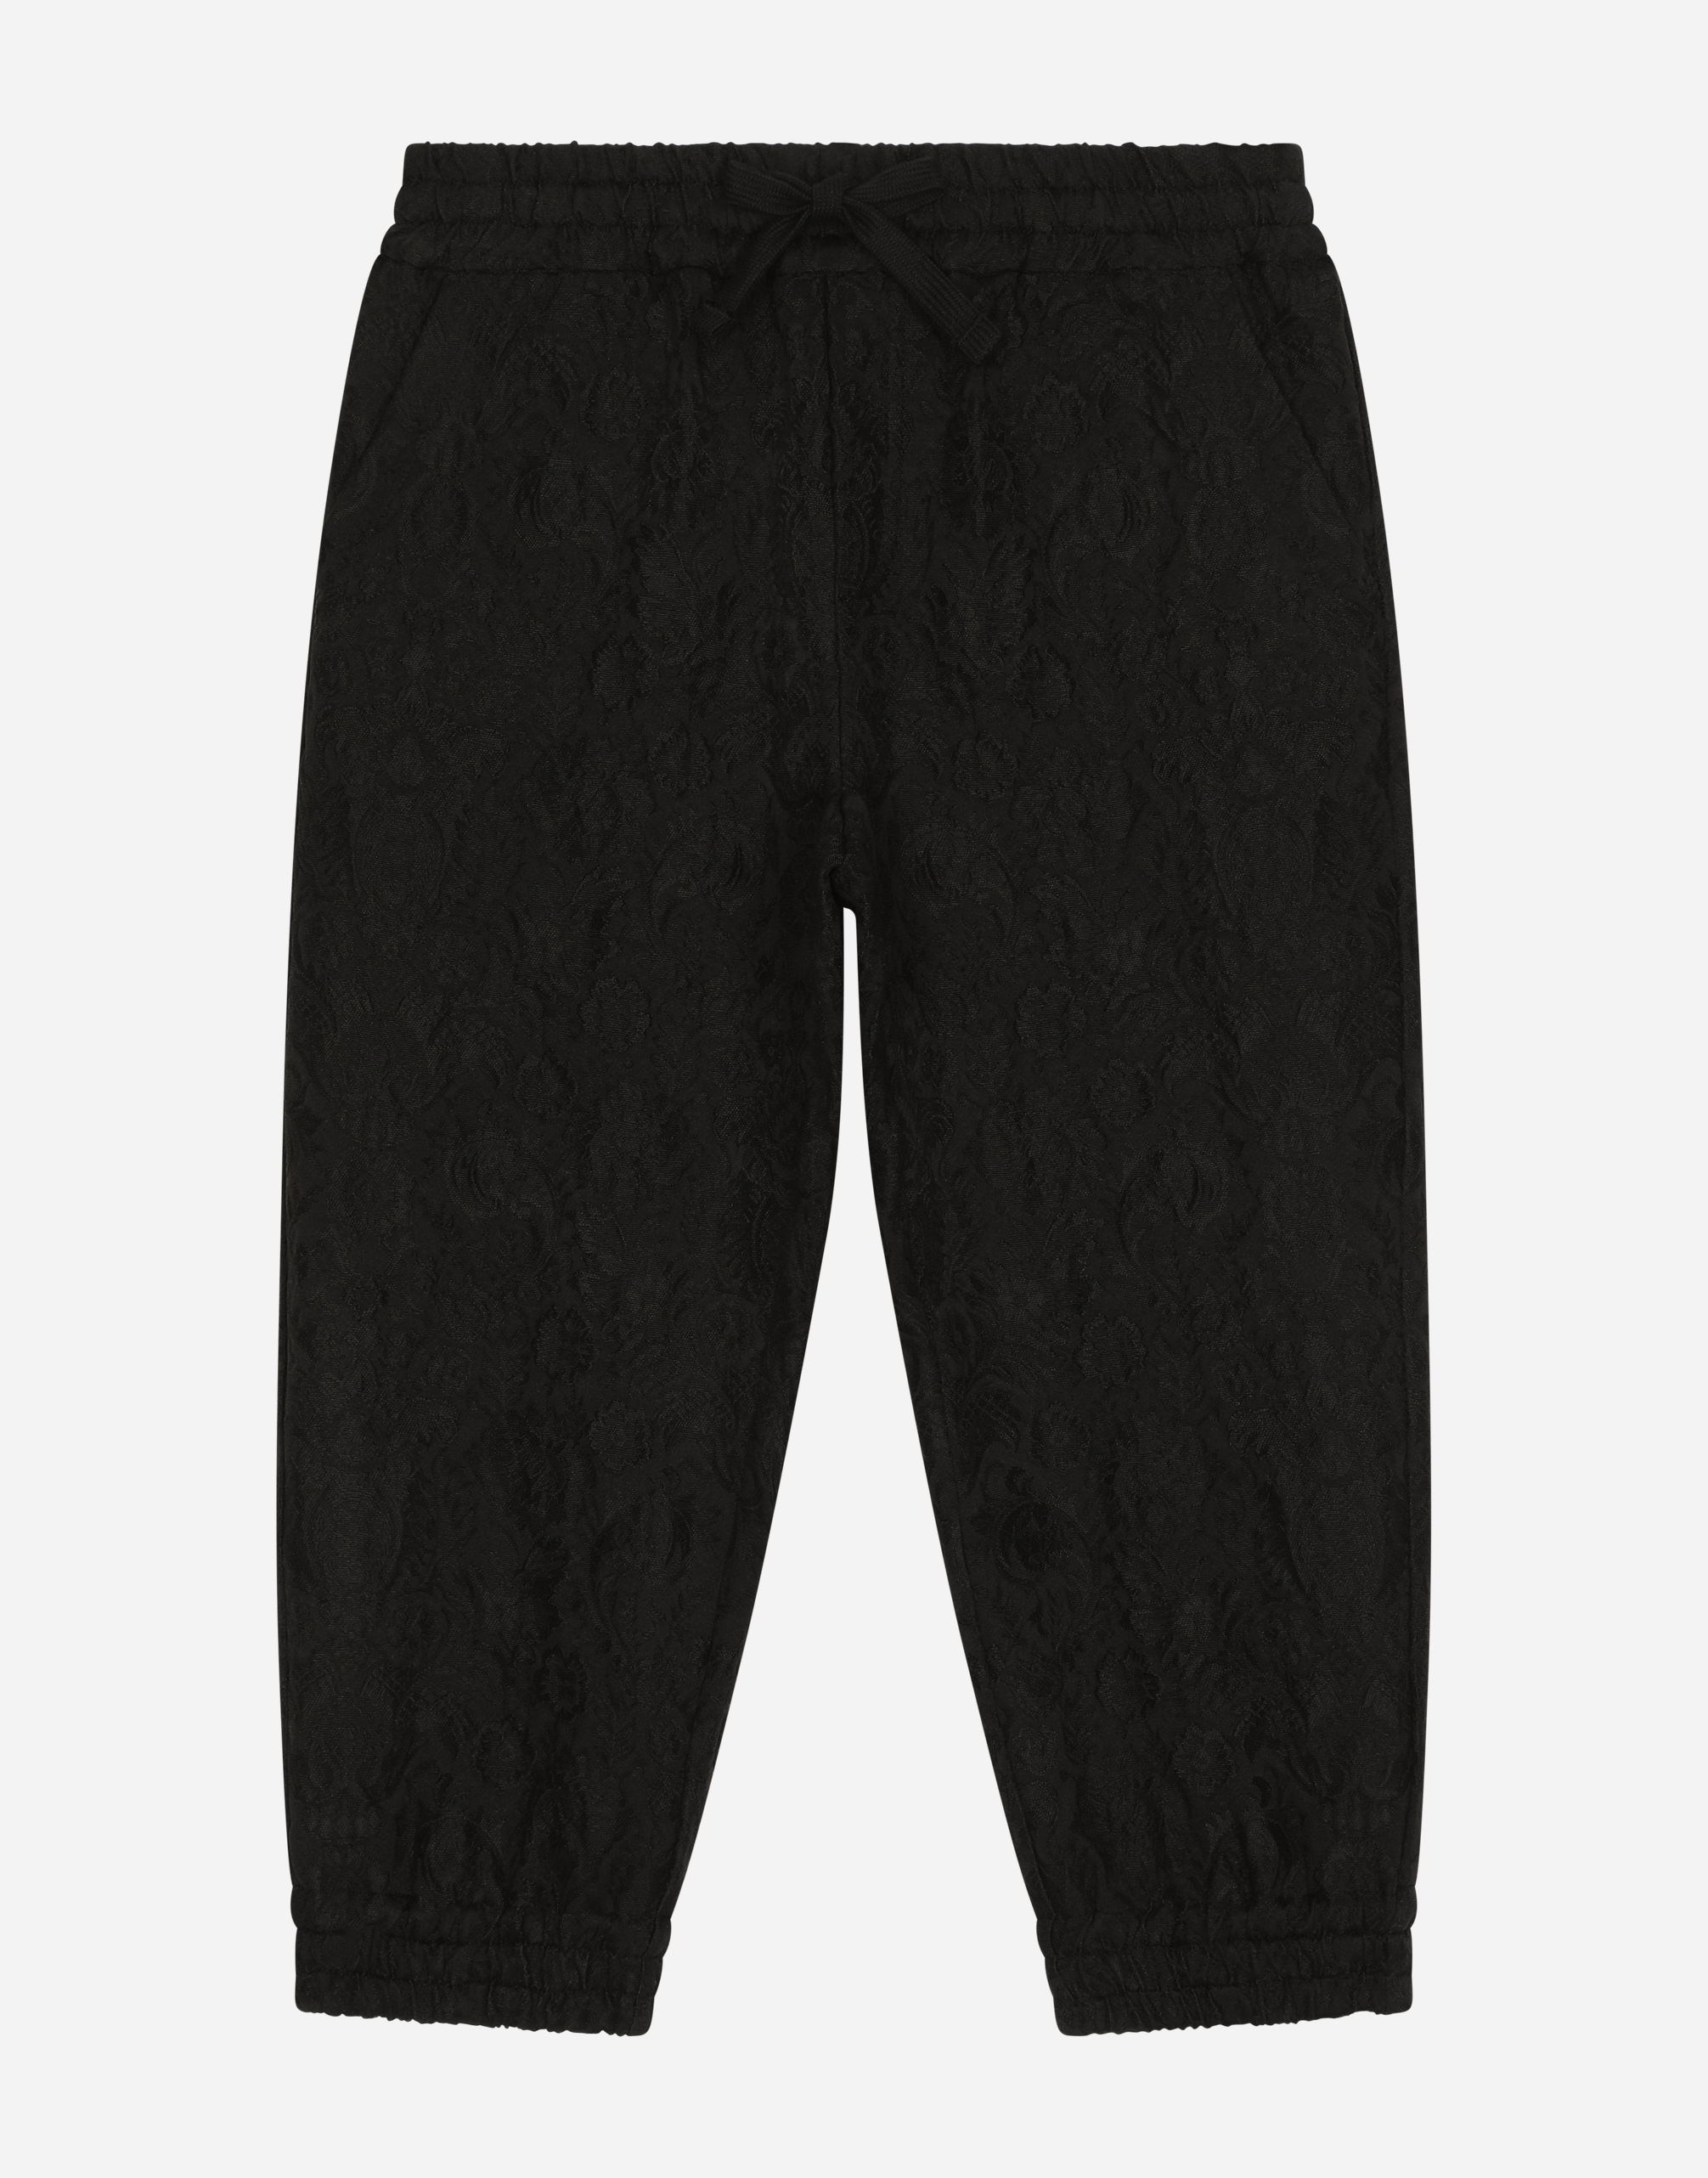 Brocade jogging pants with logo tag in Black